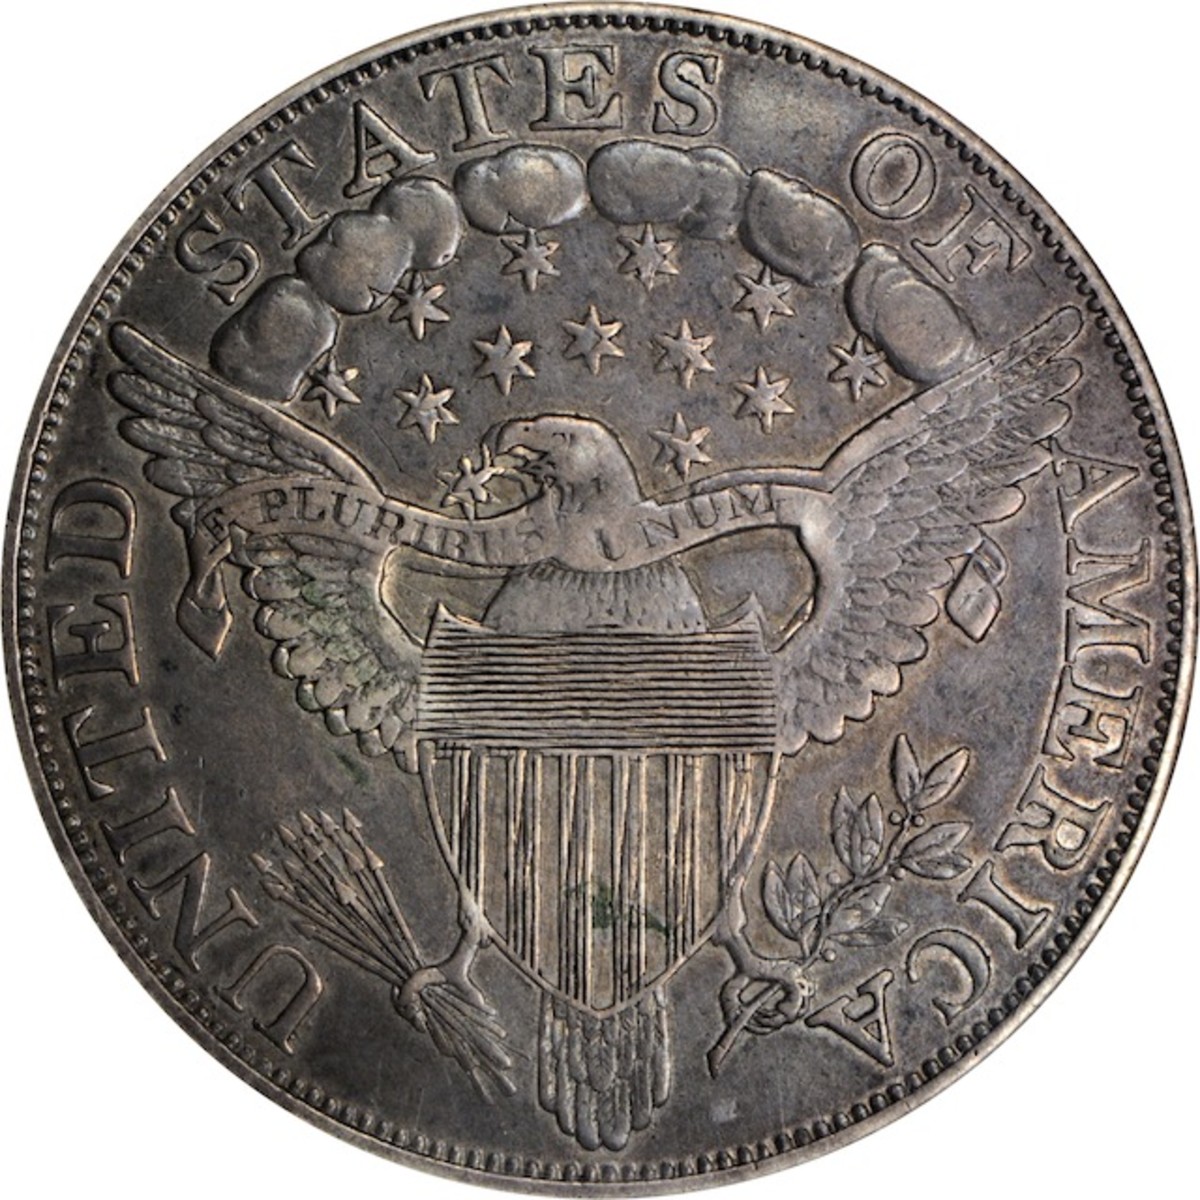 Reverse of the class-III 1804 silver dollar